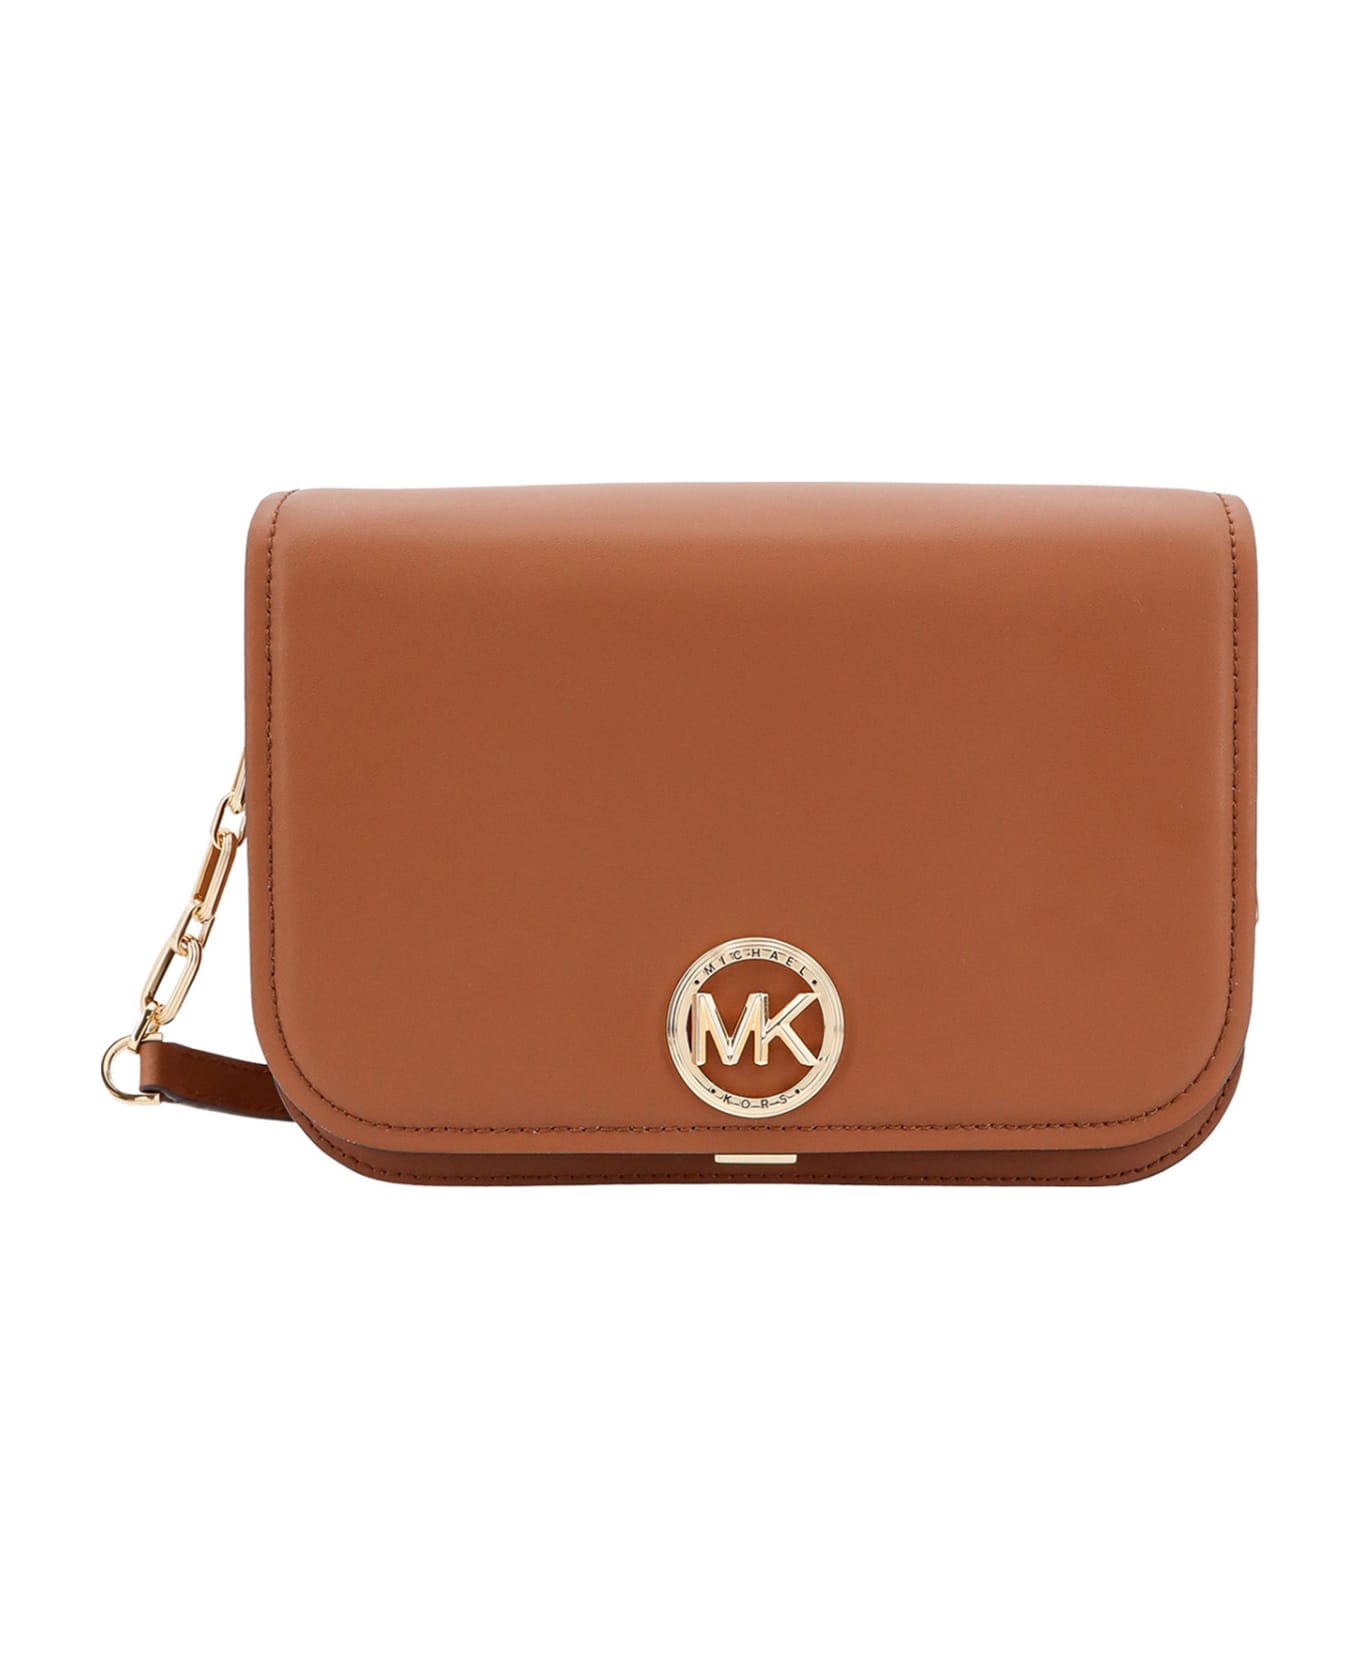 Michael Kors Dpp - Messenger Bag 'delancey' Medium - Brown